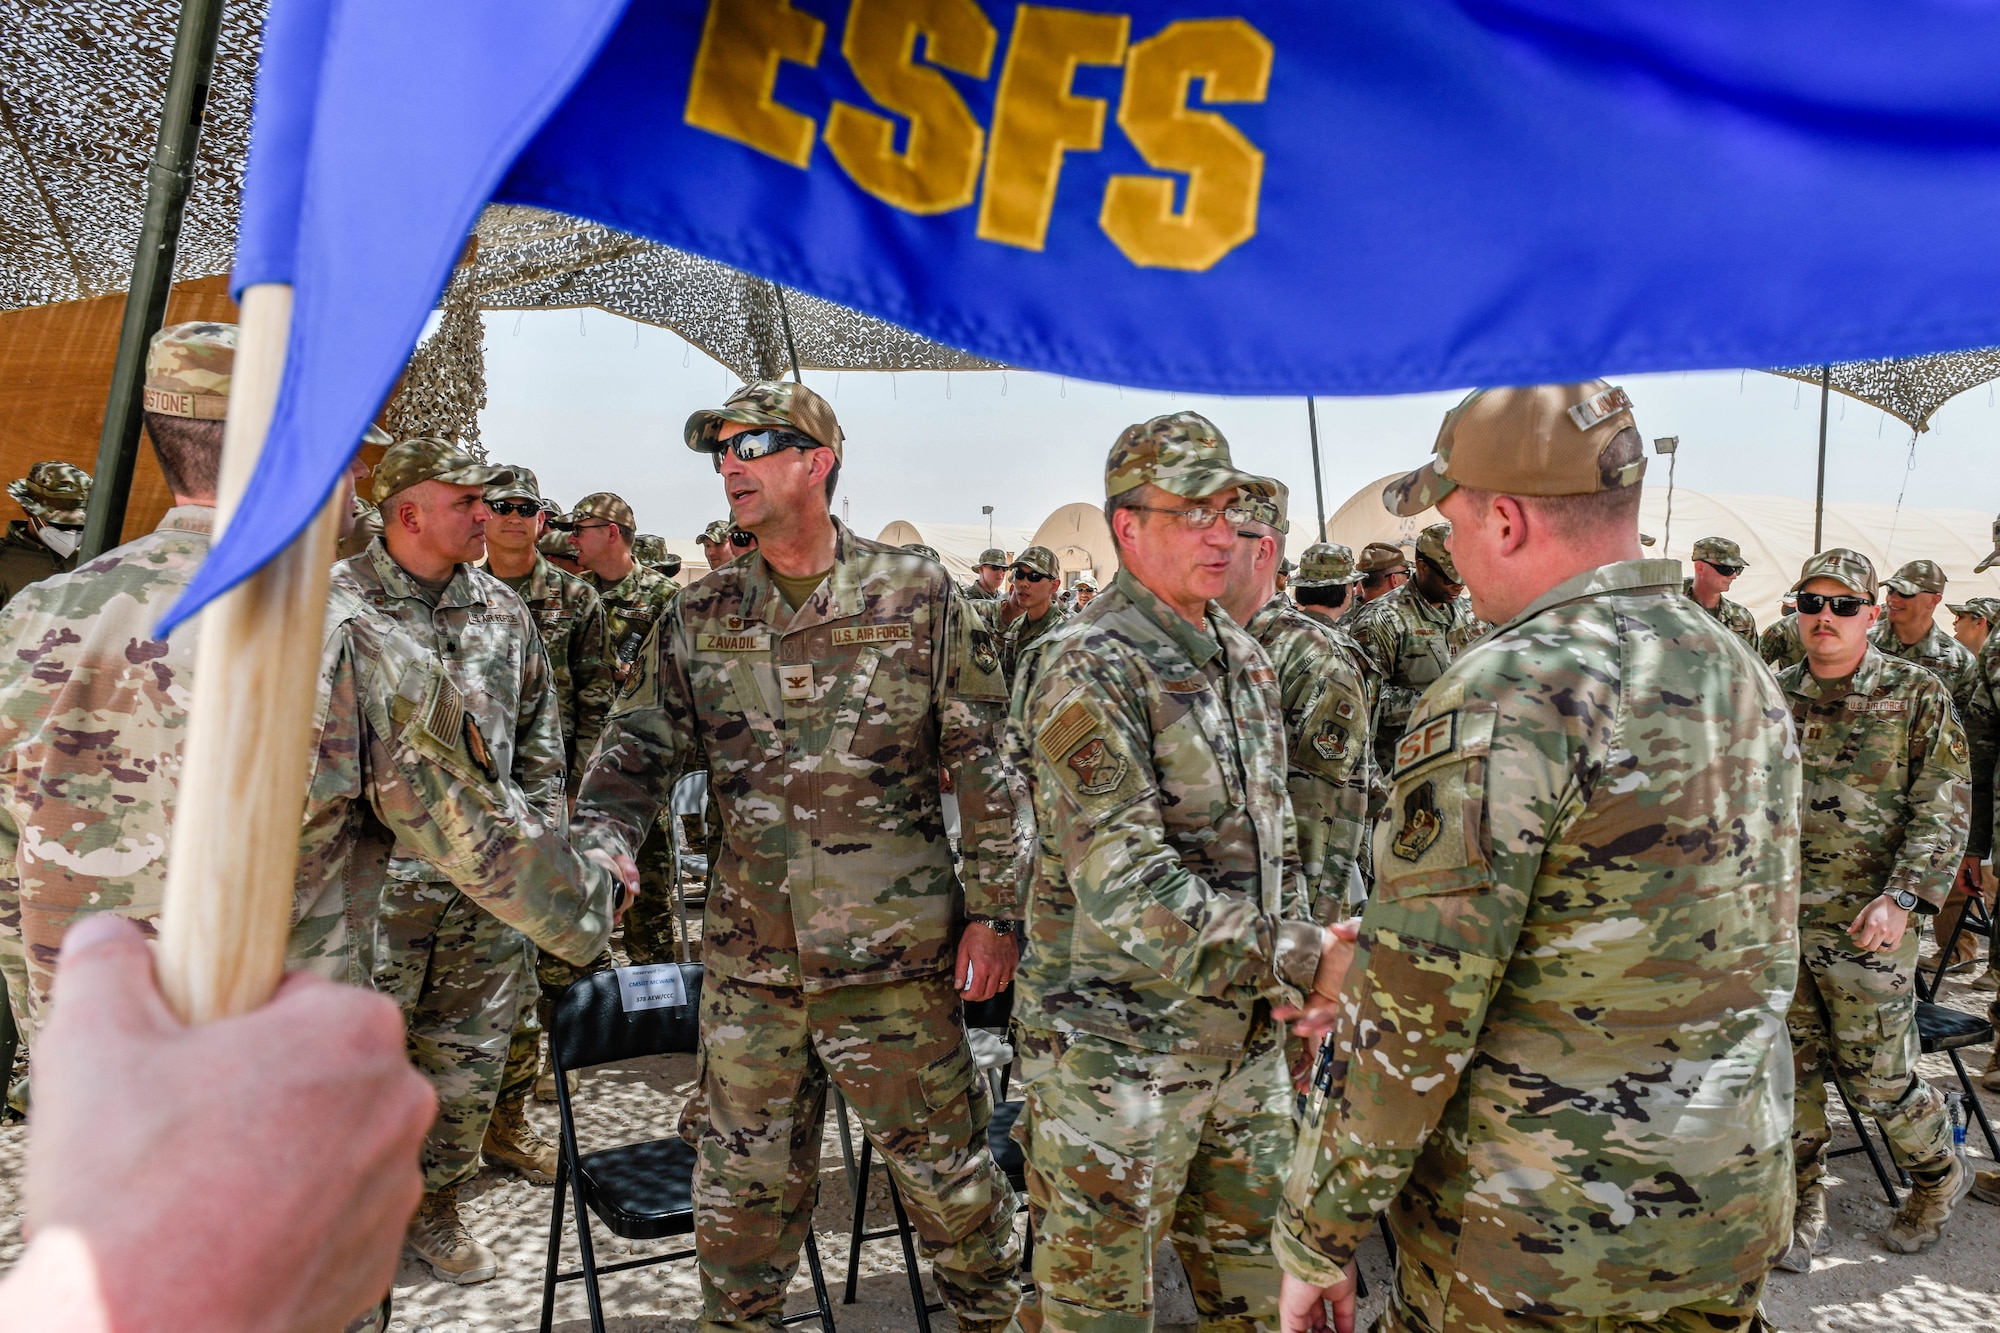 378th ESFS receives new commander